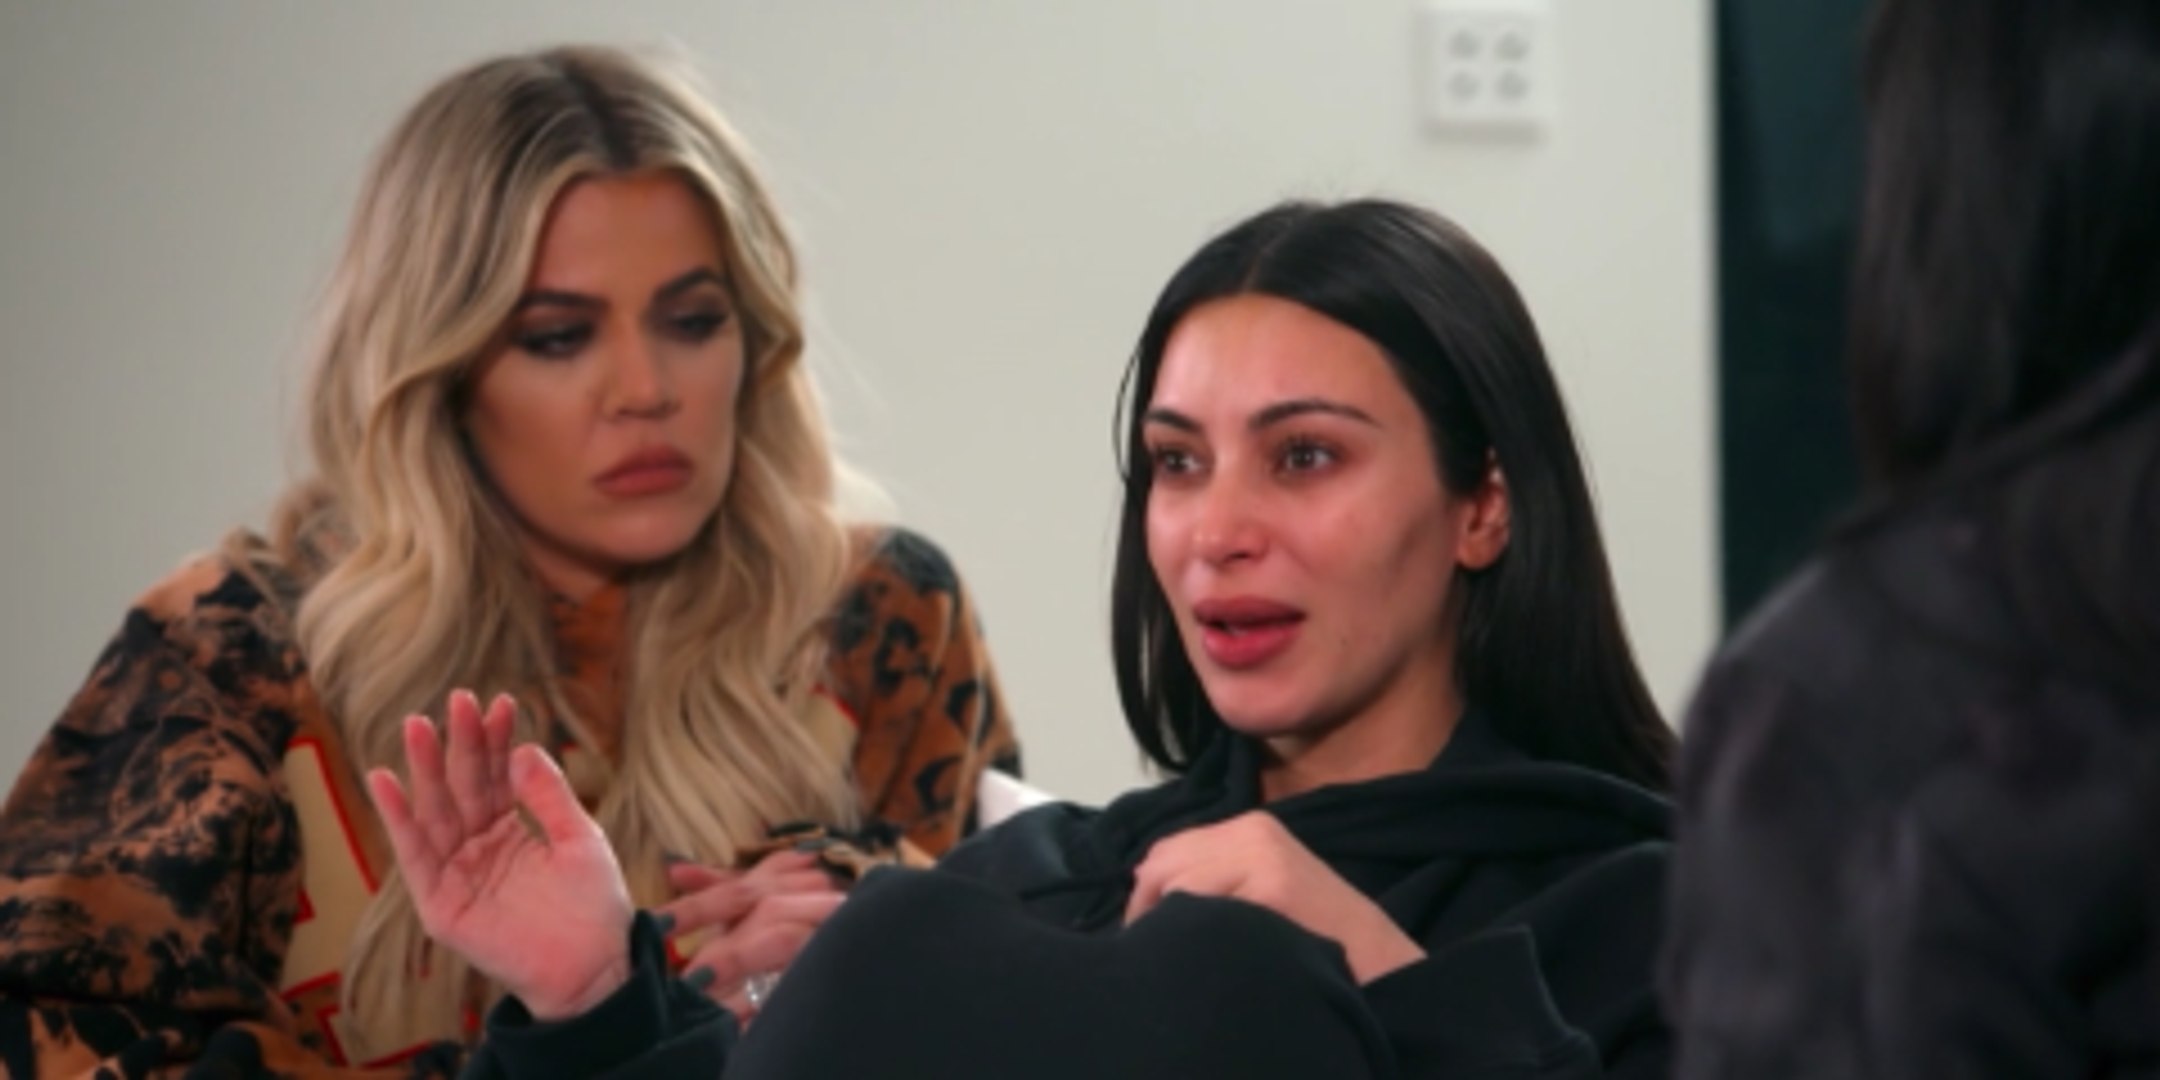 Keeping Up With The Kardashians Season 14 Episode 7